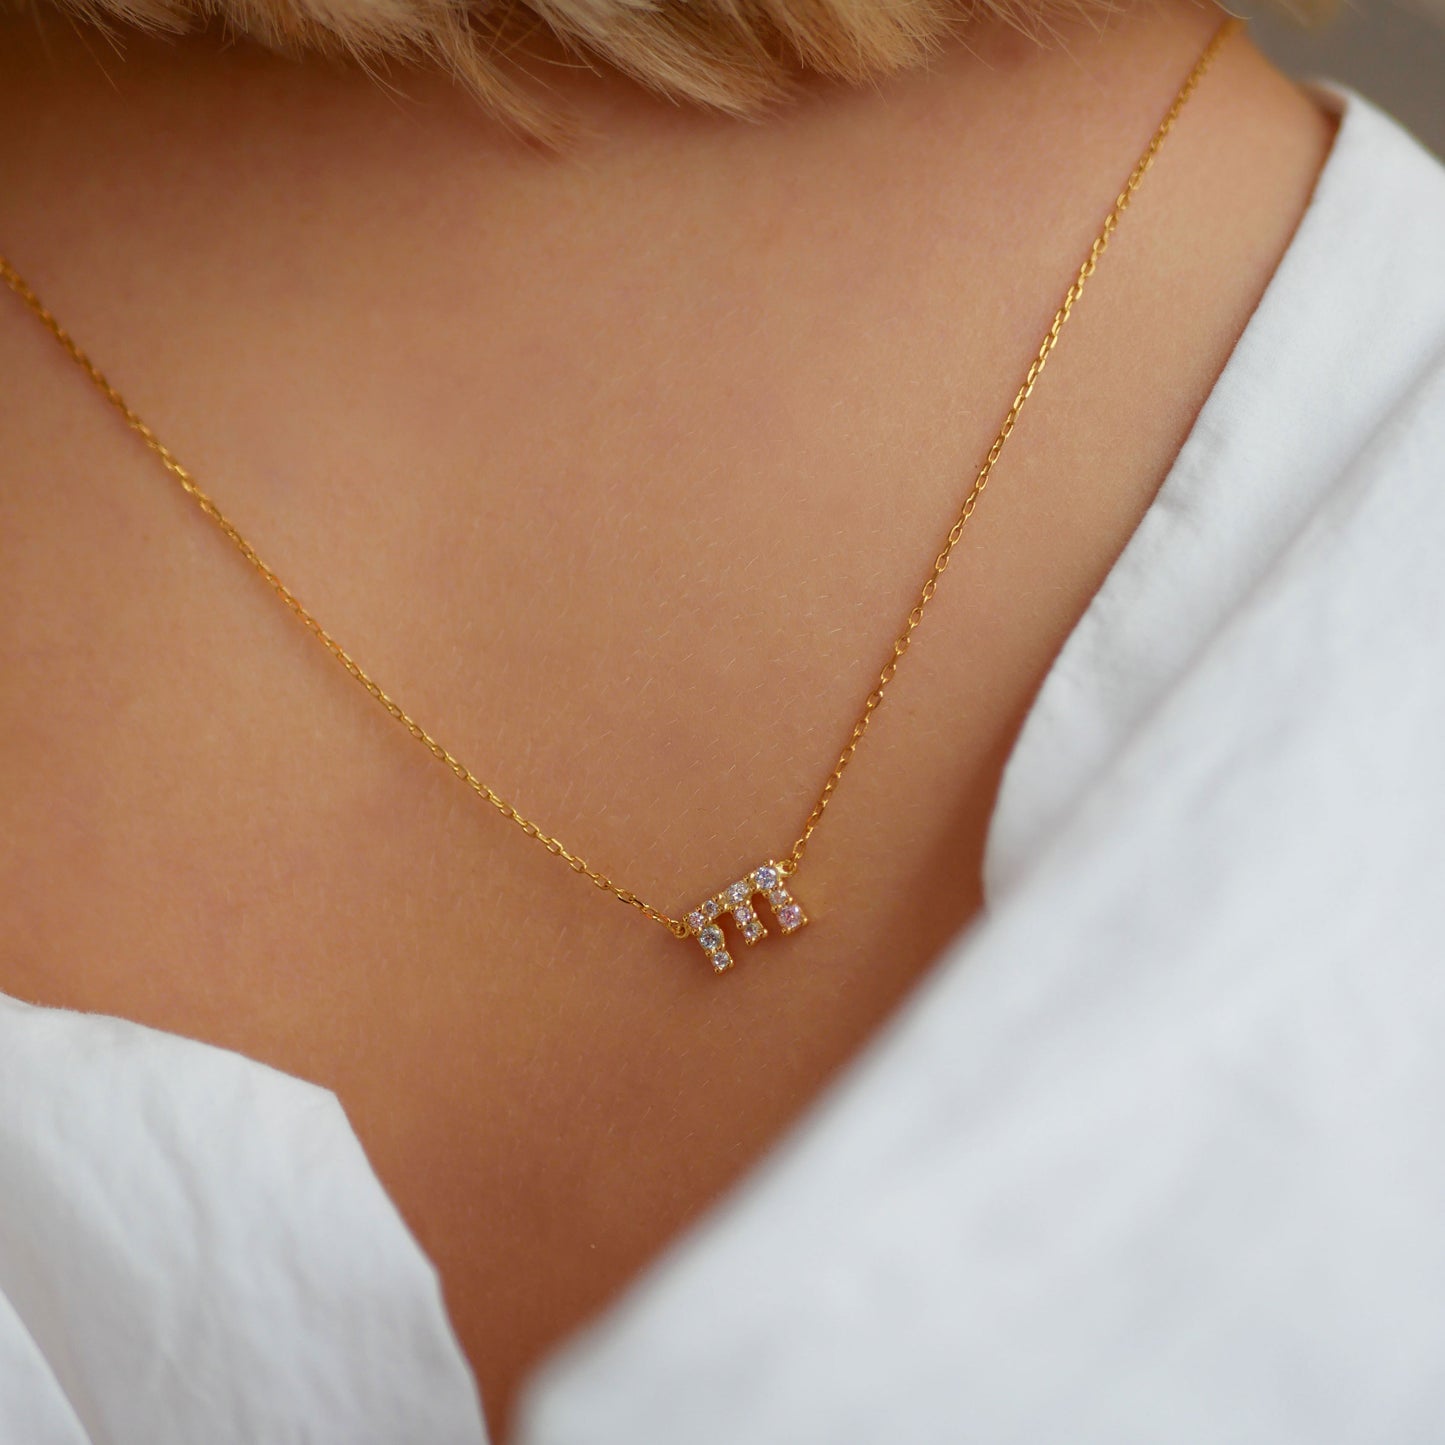 Bogstav halskæde i guld på en enkel og tynd guldkæde fra Enamel Copenhagen